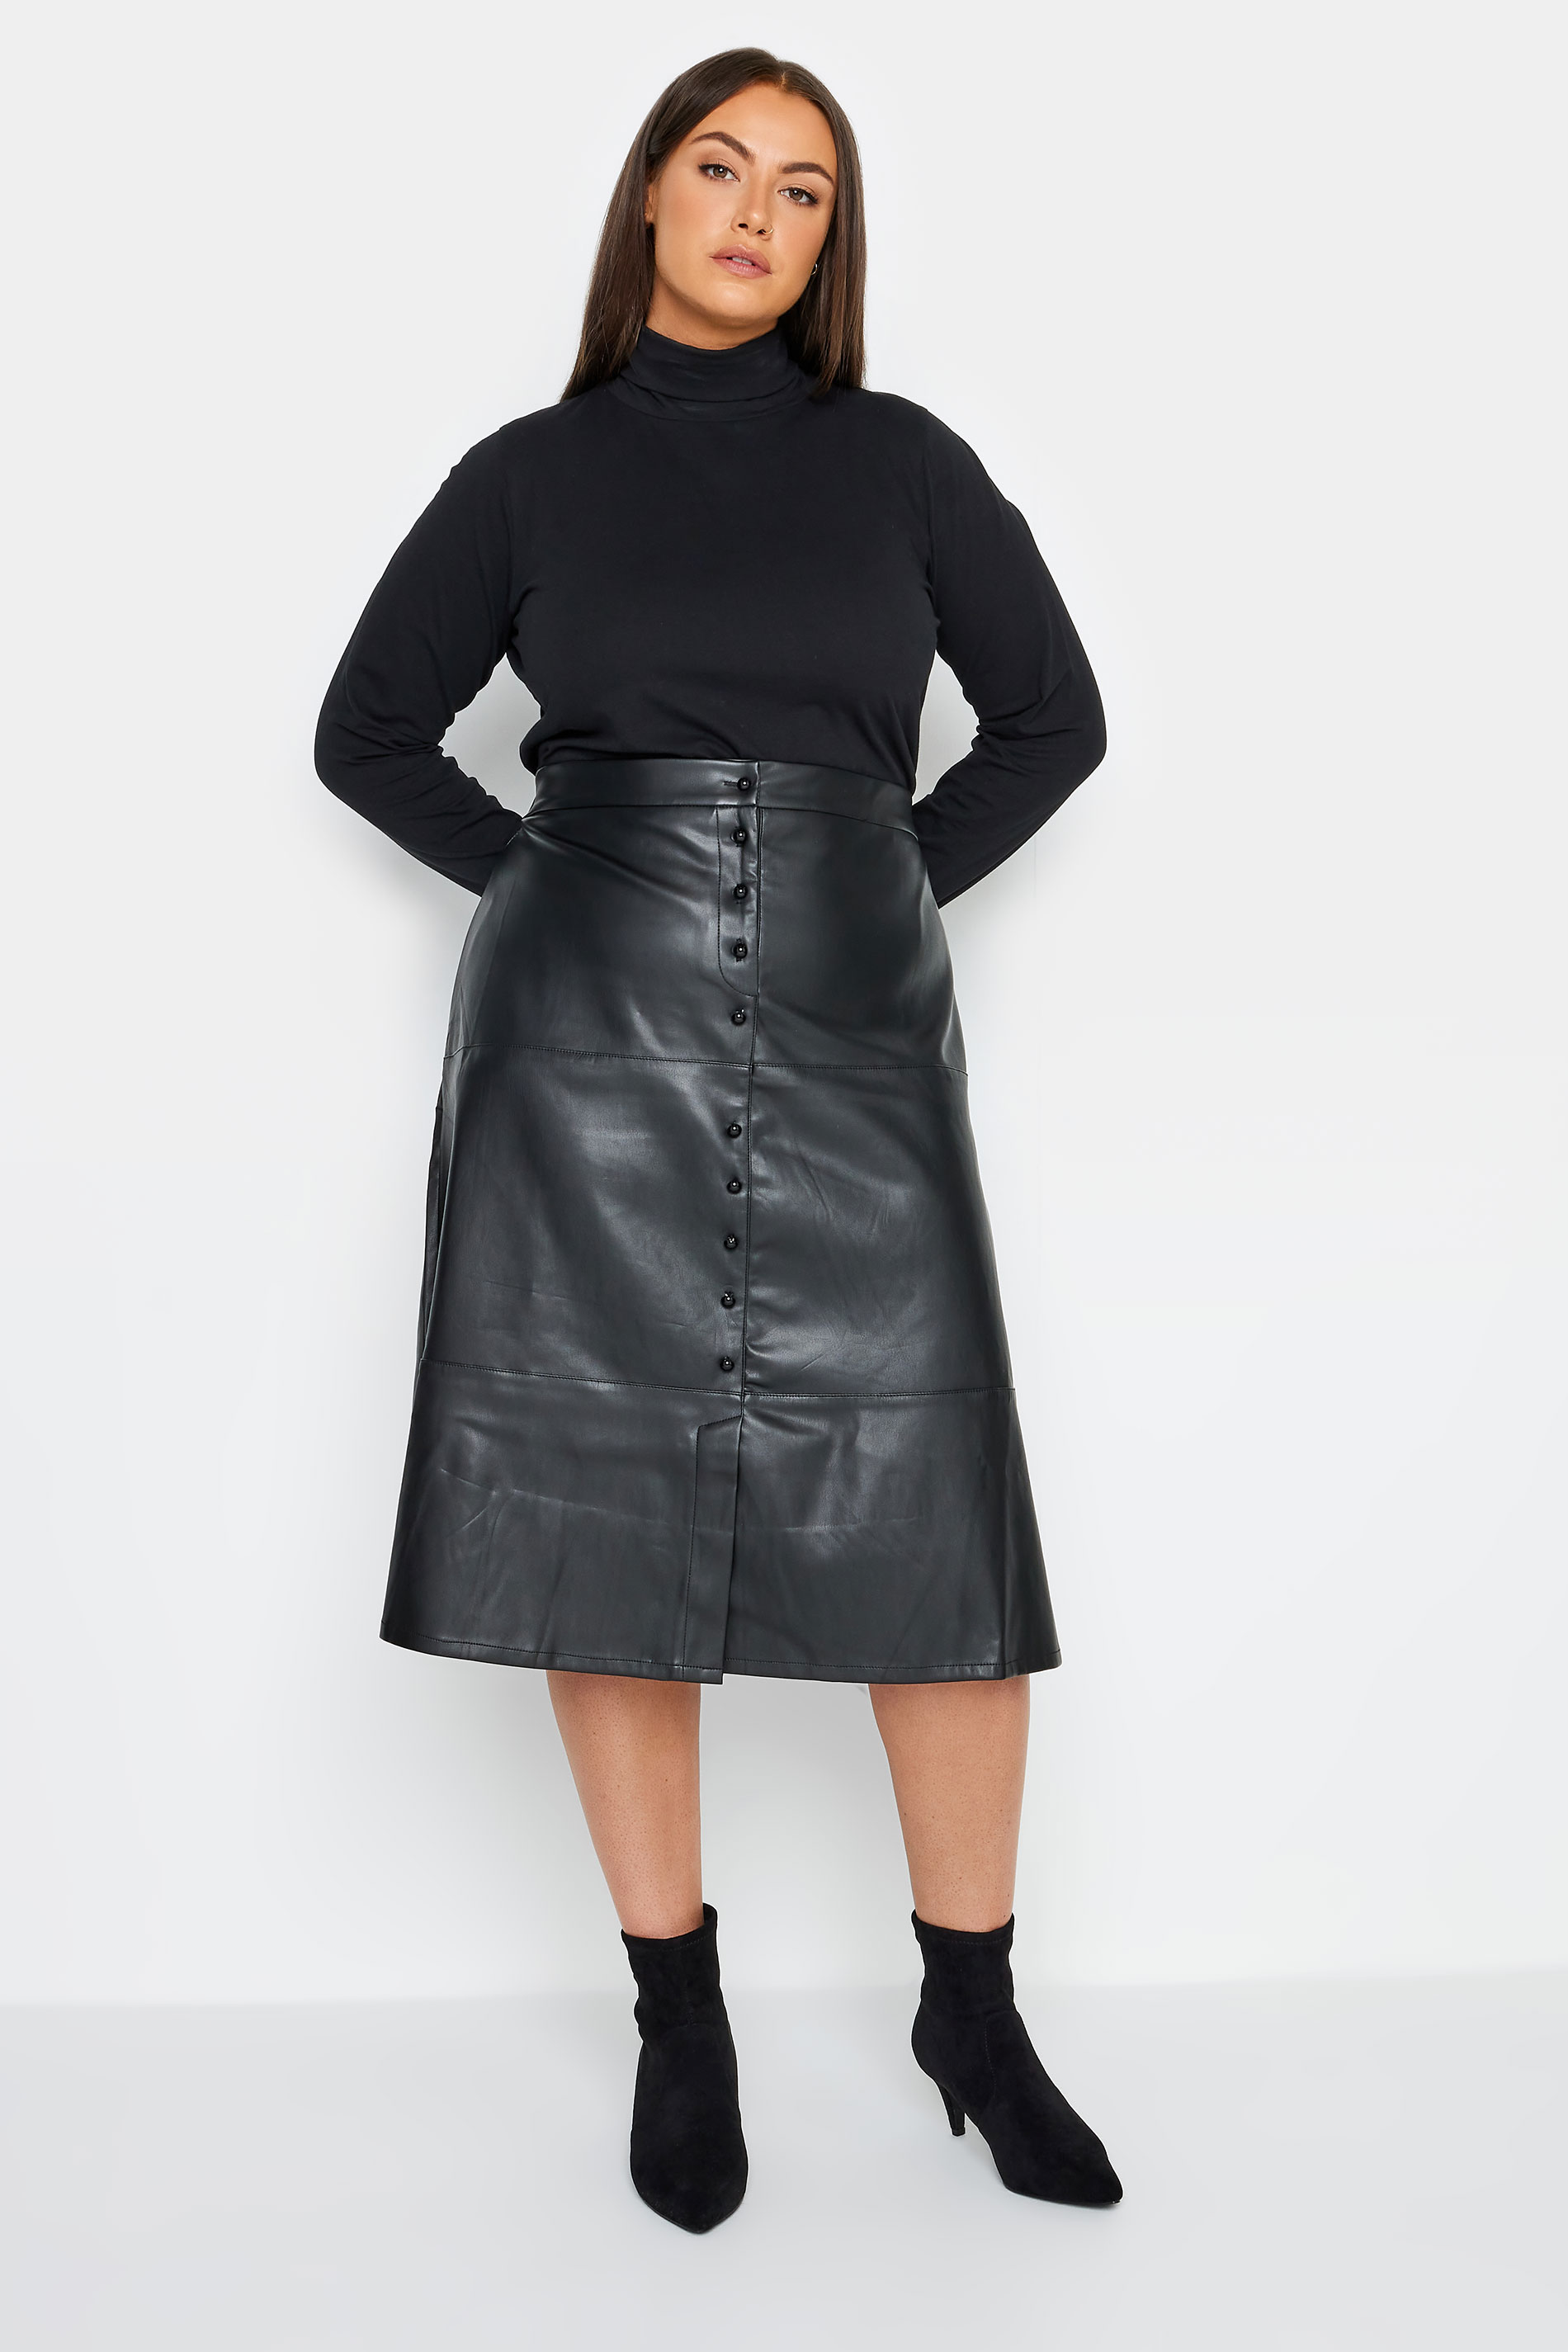 City Chic Black Vegan Leather Button Skirt 2